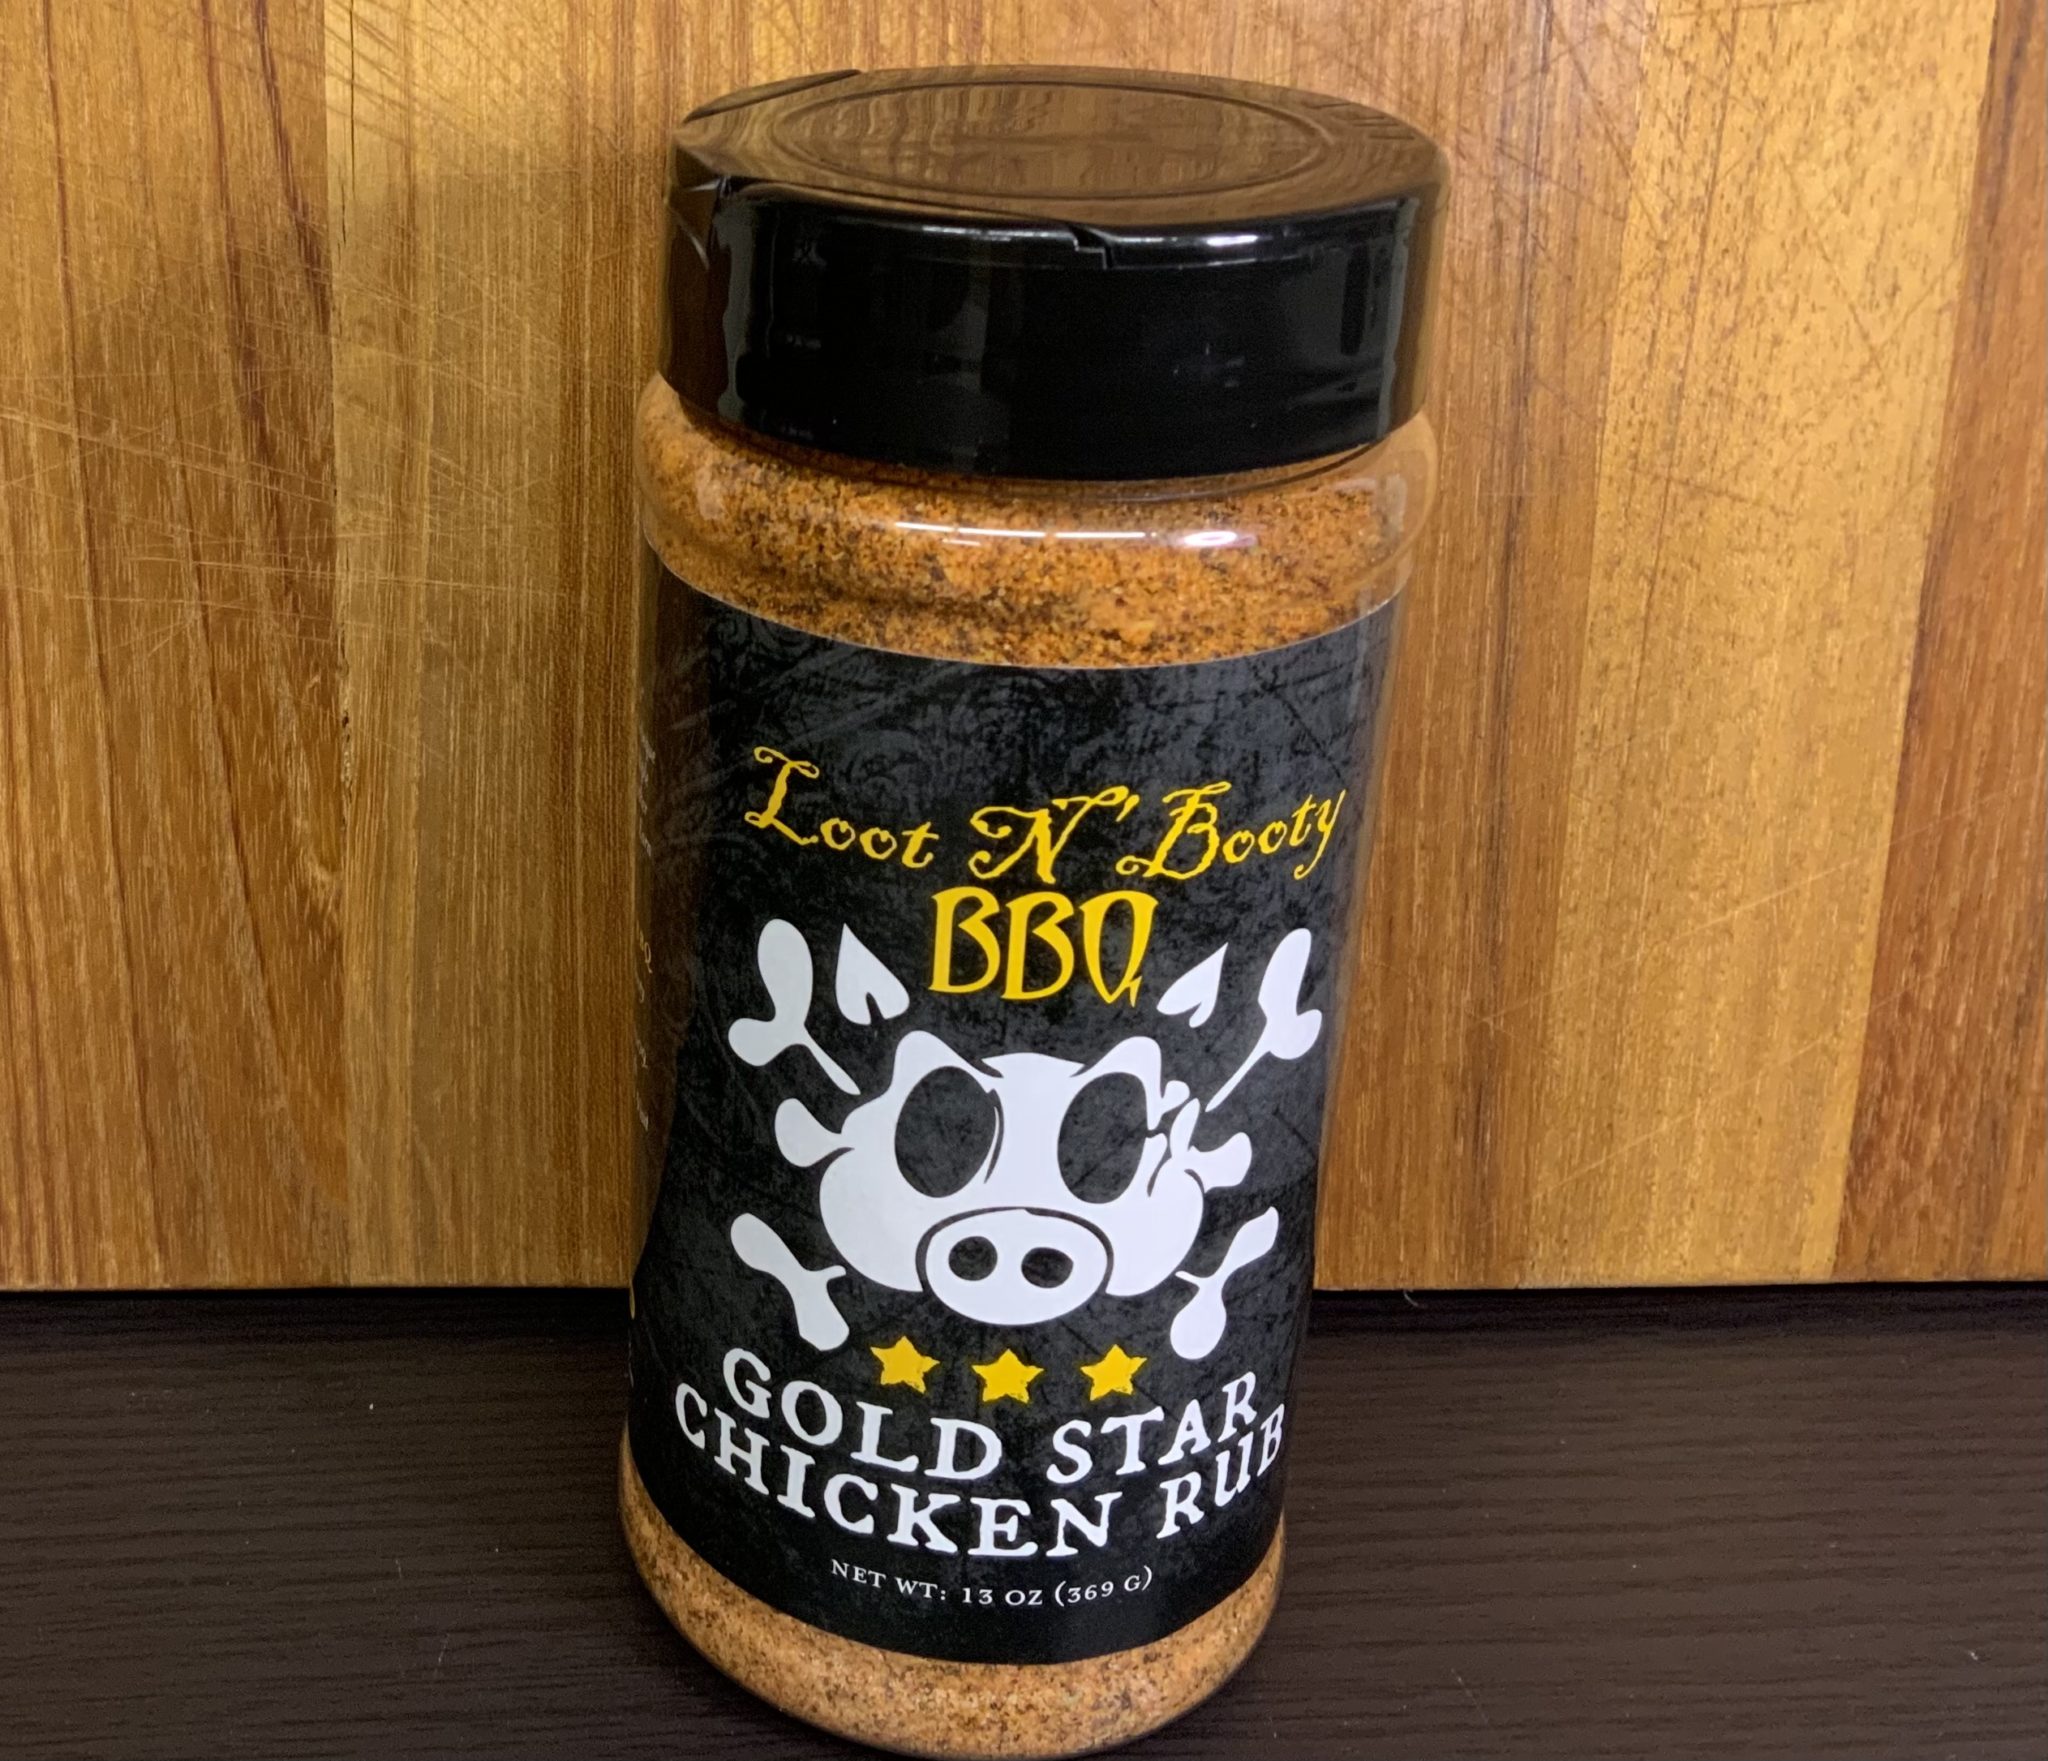 Loot N’ Booty Gold Star Chicken Rub